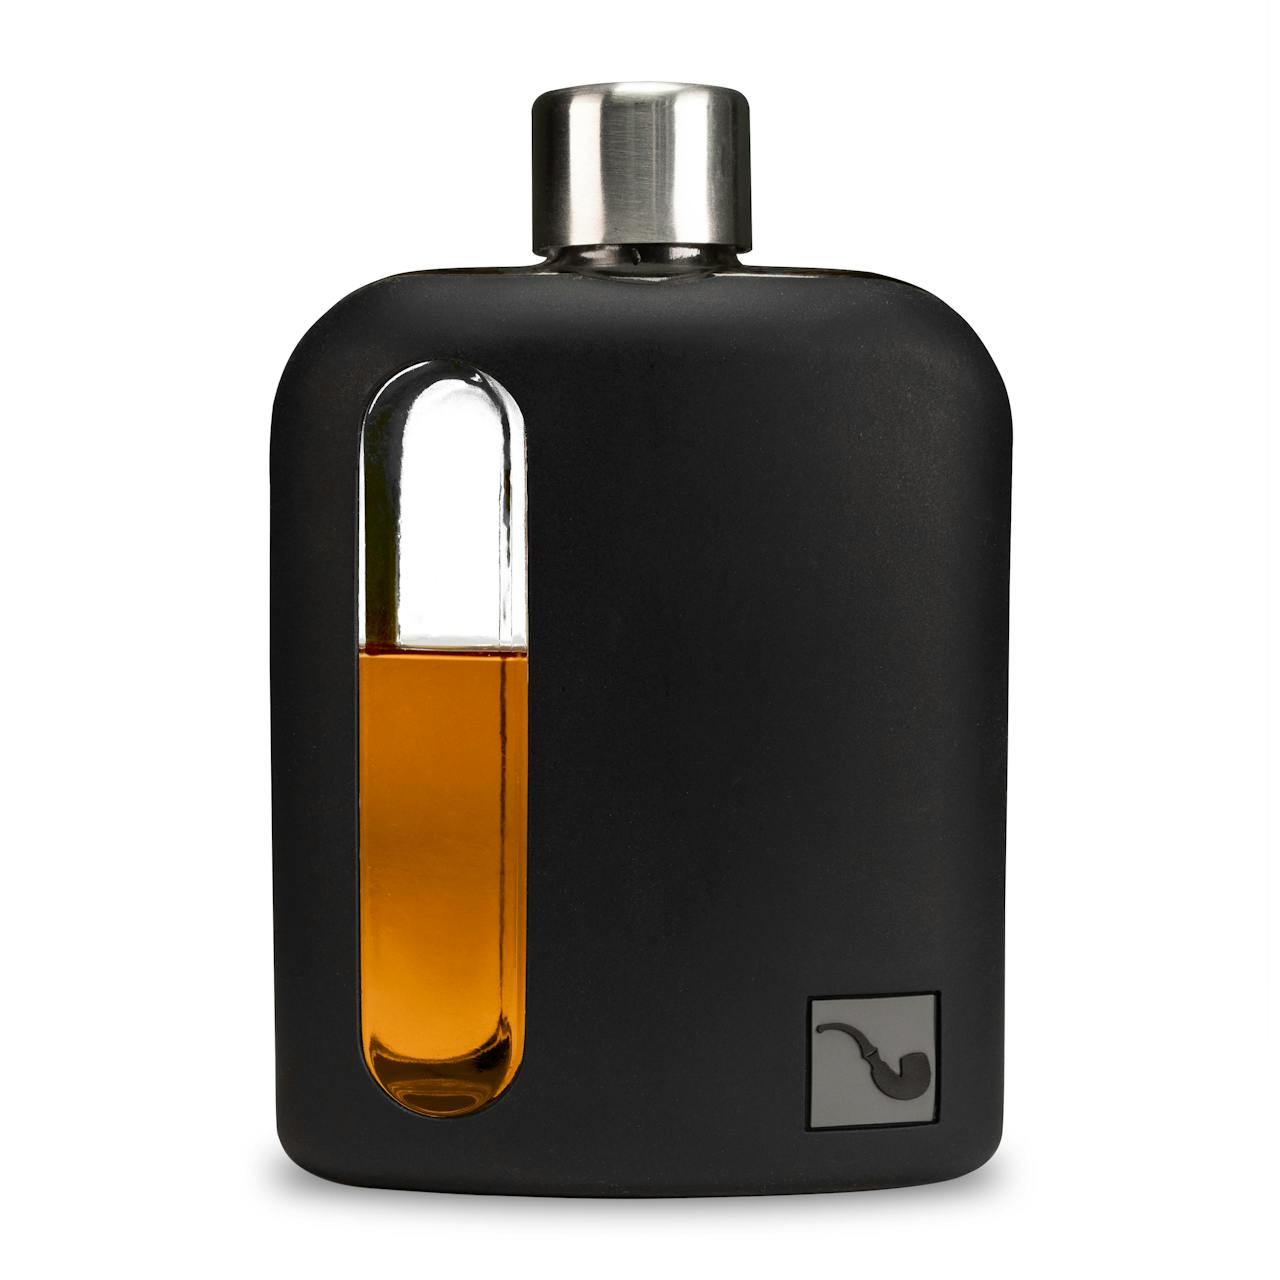 Ragproper Black Silicone + Glass Flask - 240ml